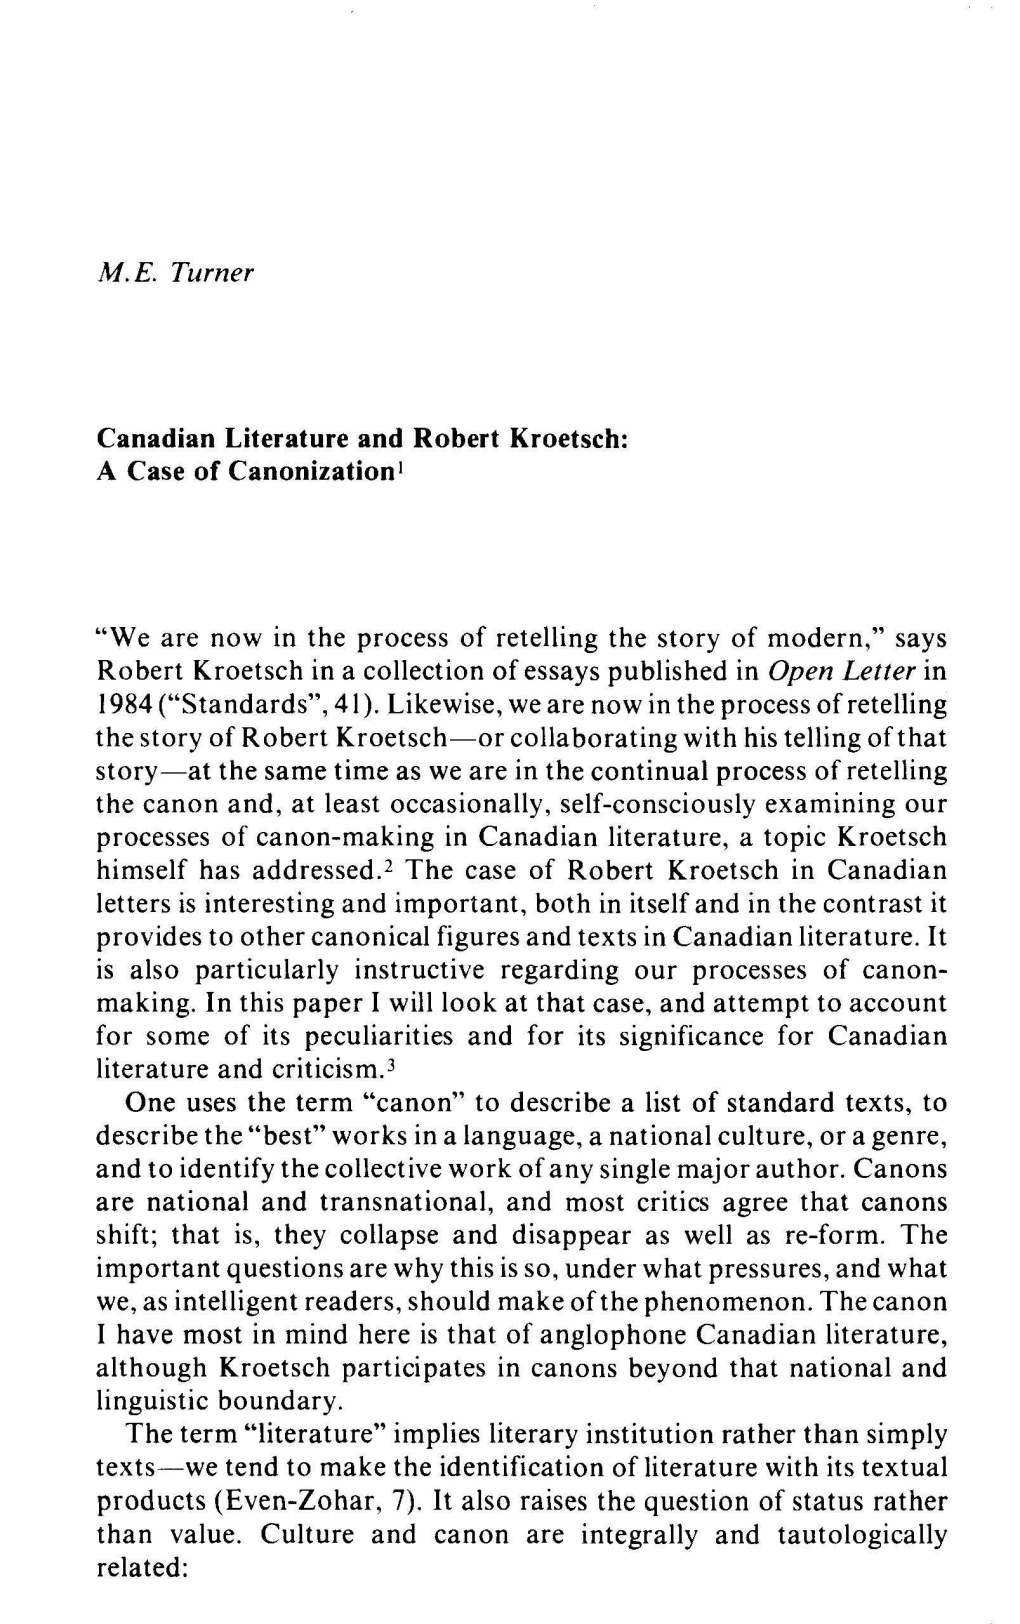 Canadian Literature and Robert Kroetsch: a Case of Canonization'